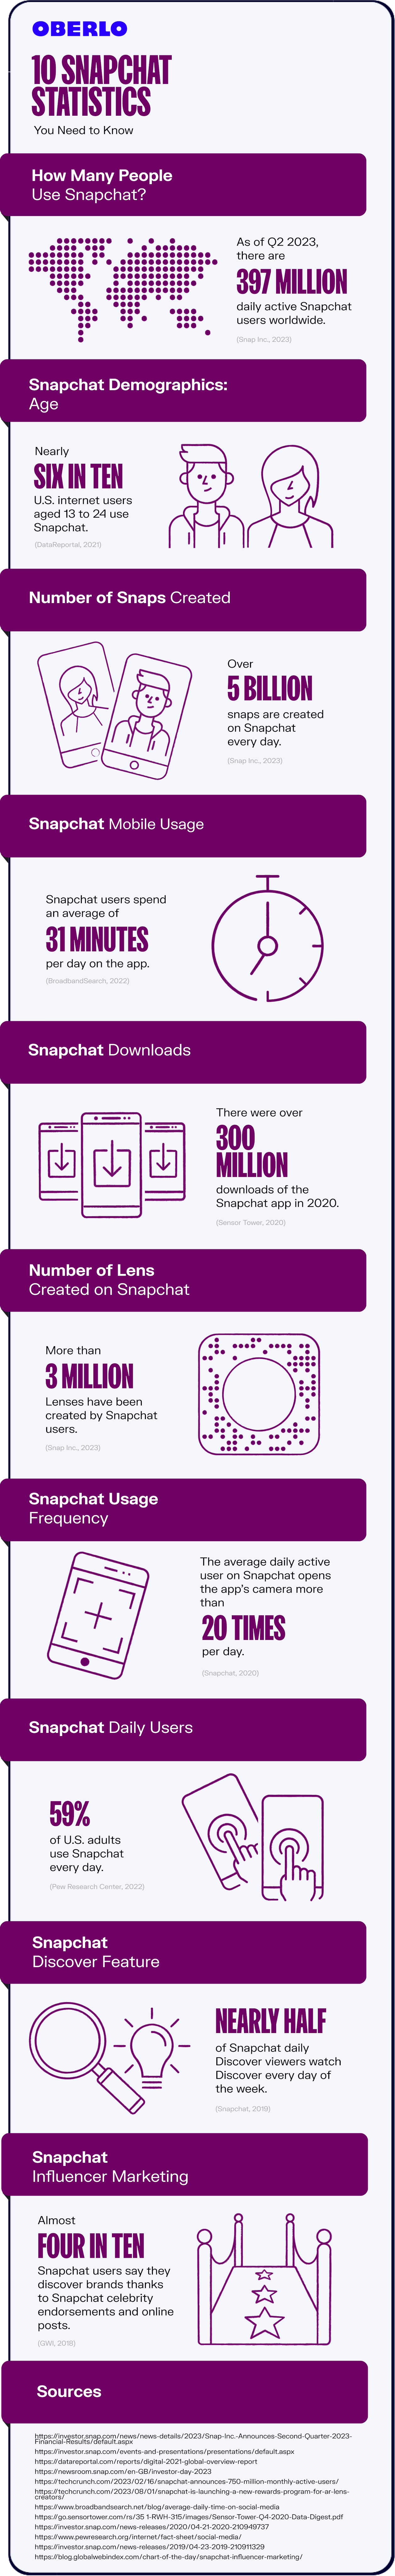 snapchat statistics full infographic